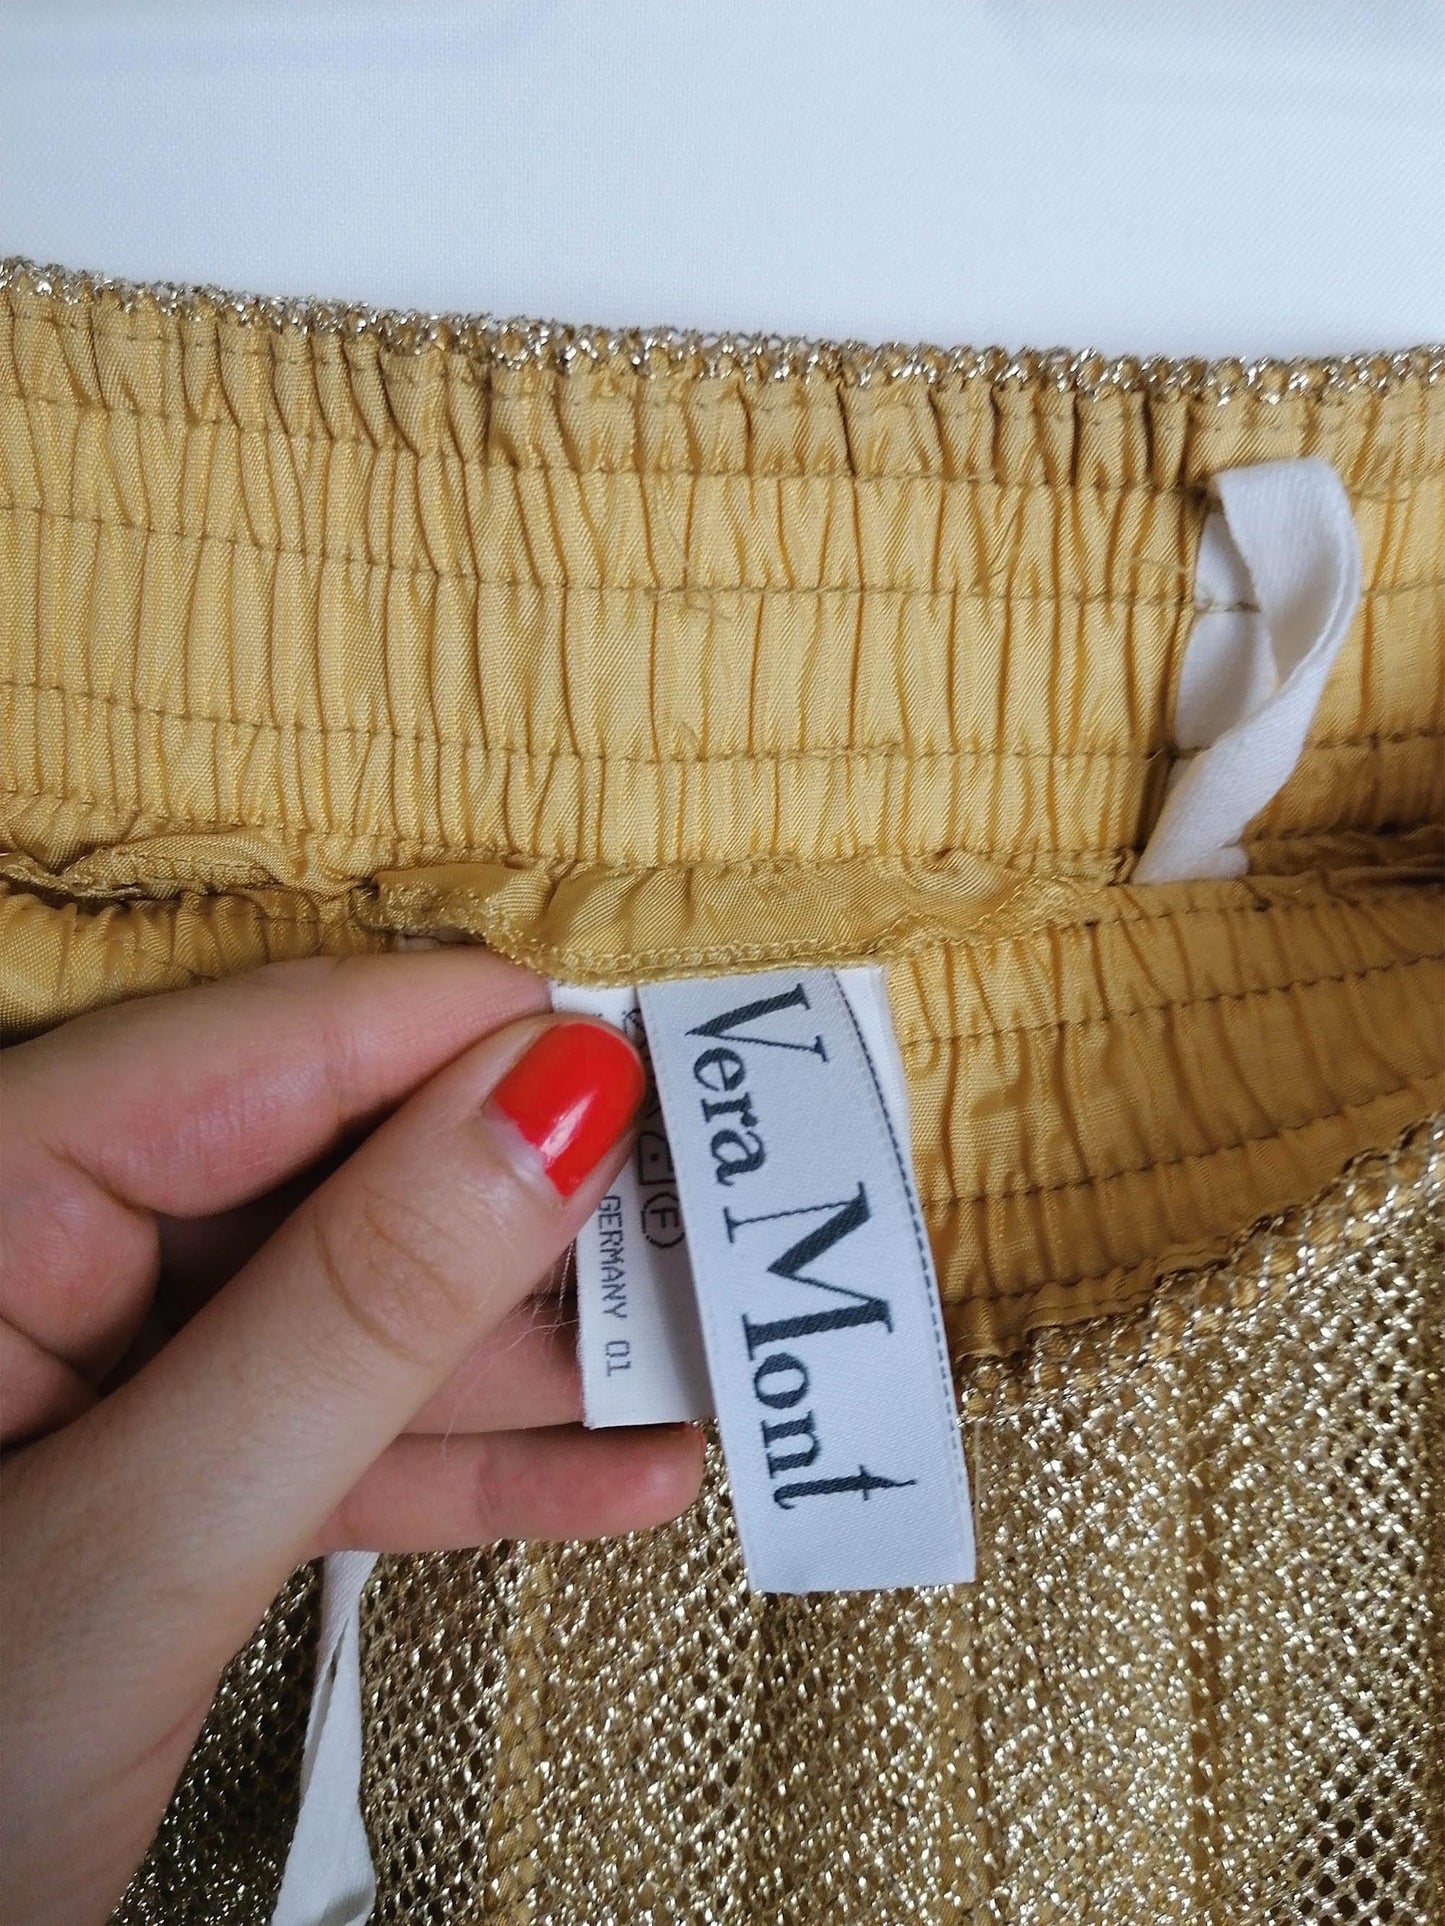 80's VERA MONT Gold Mesh Full Skirt - size M-L / UK 14 / F 42